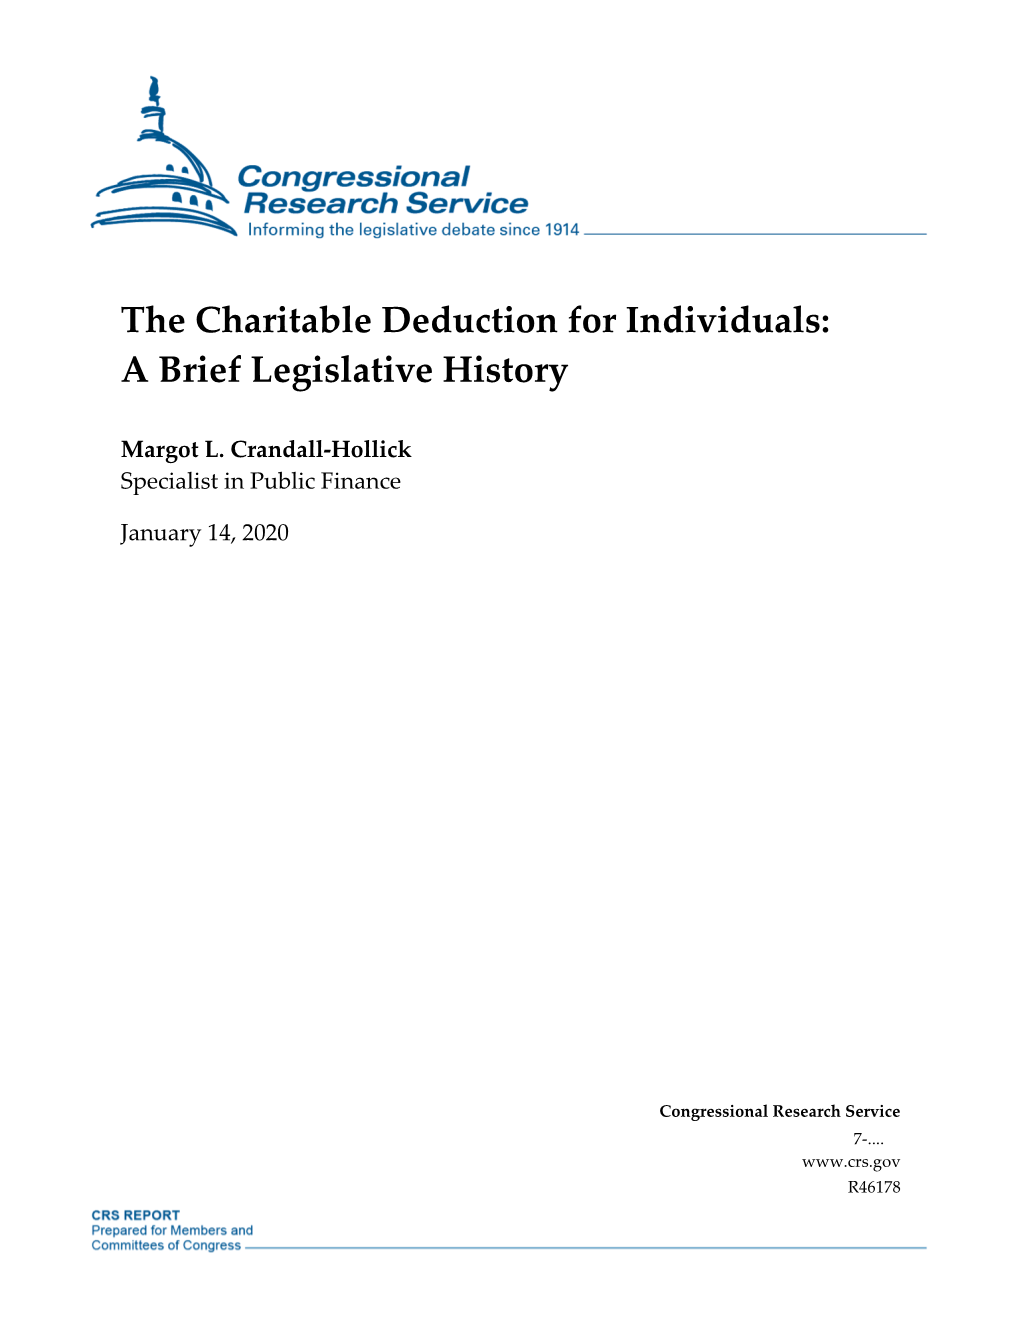 The Charitable Deduction for Individuals: a Brief Legislative History